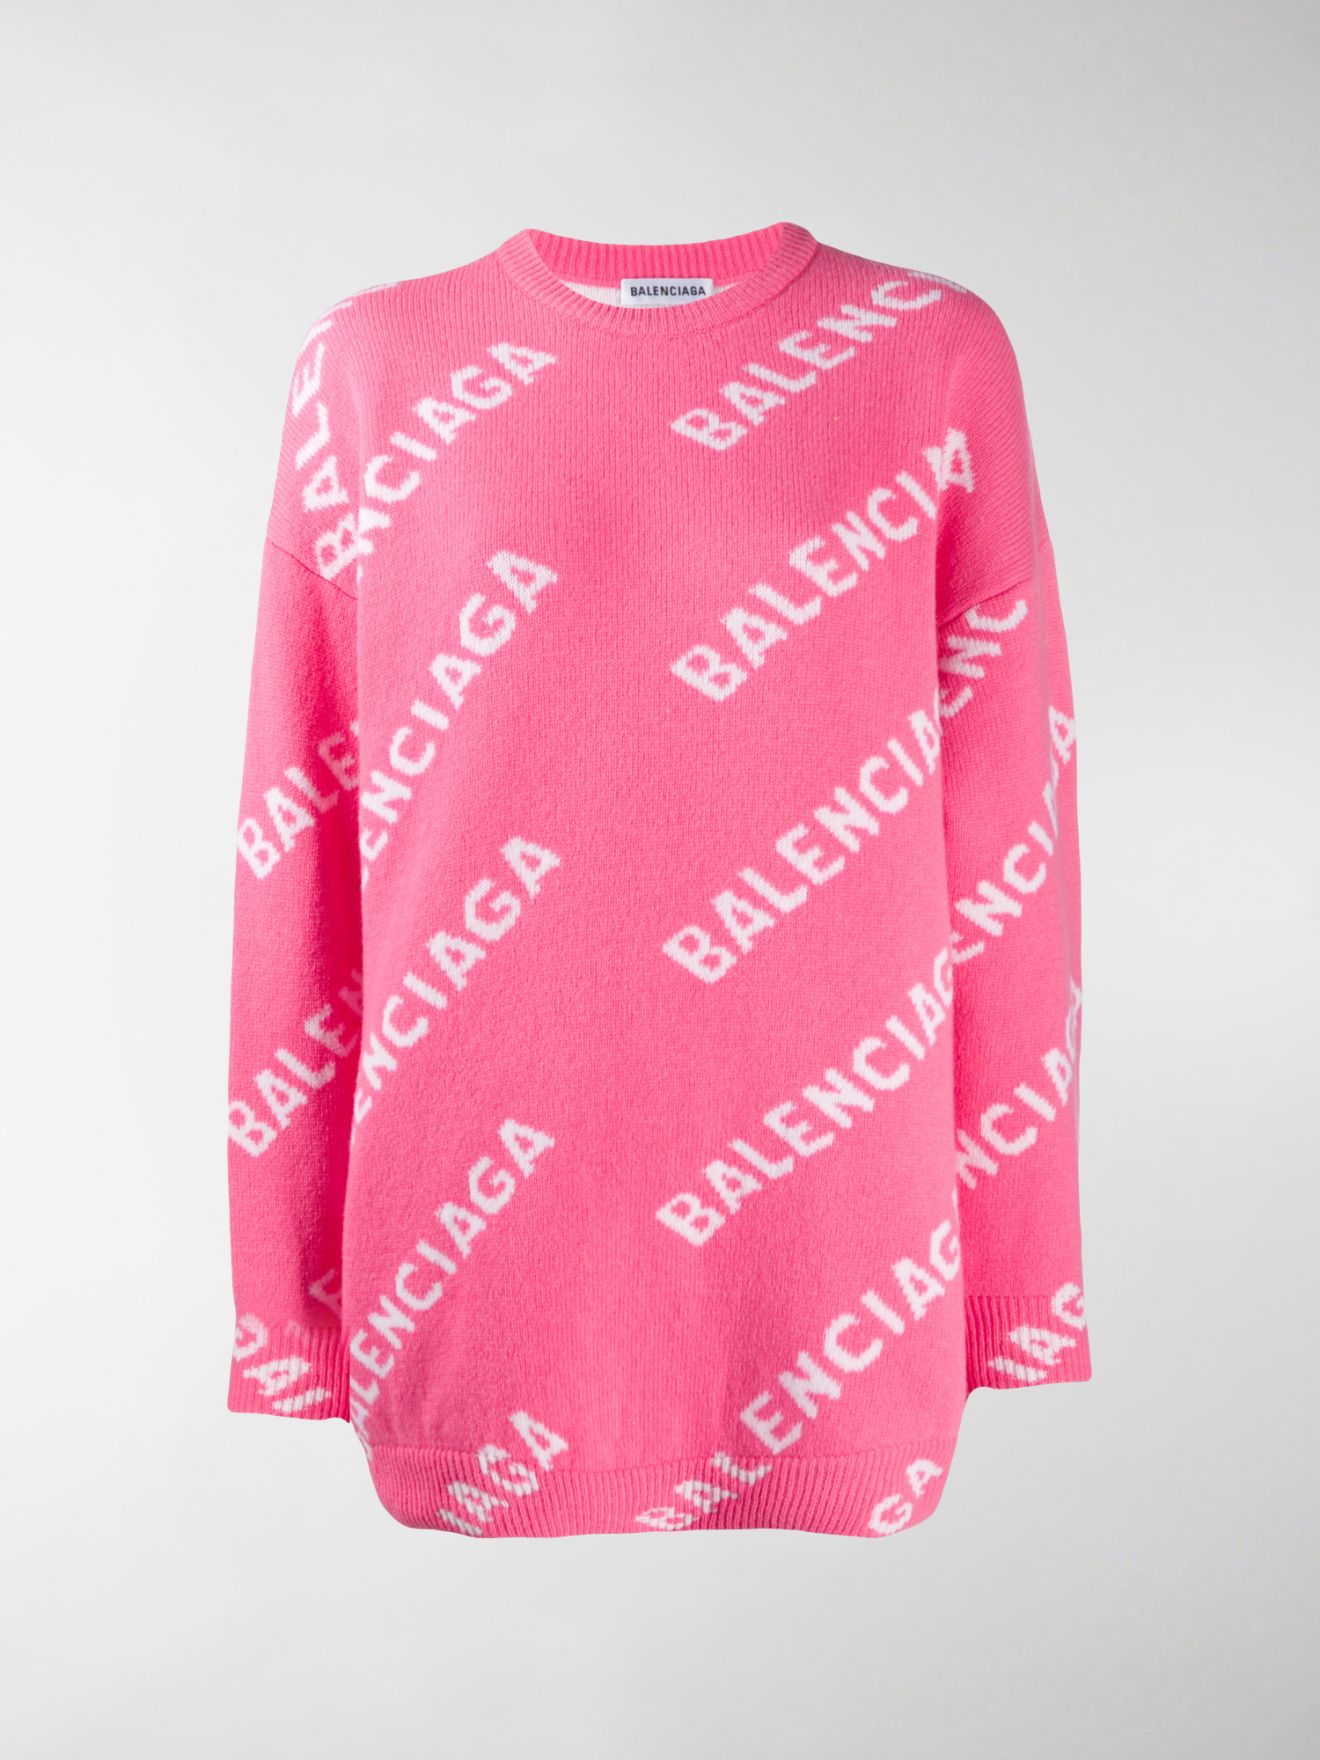 balenciaga jacquard logo sweater